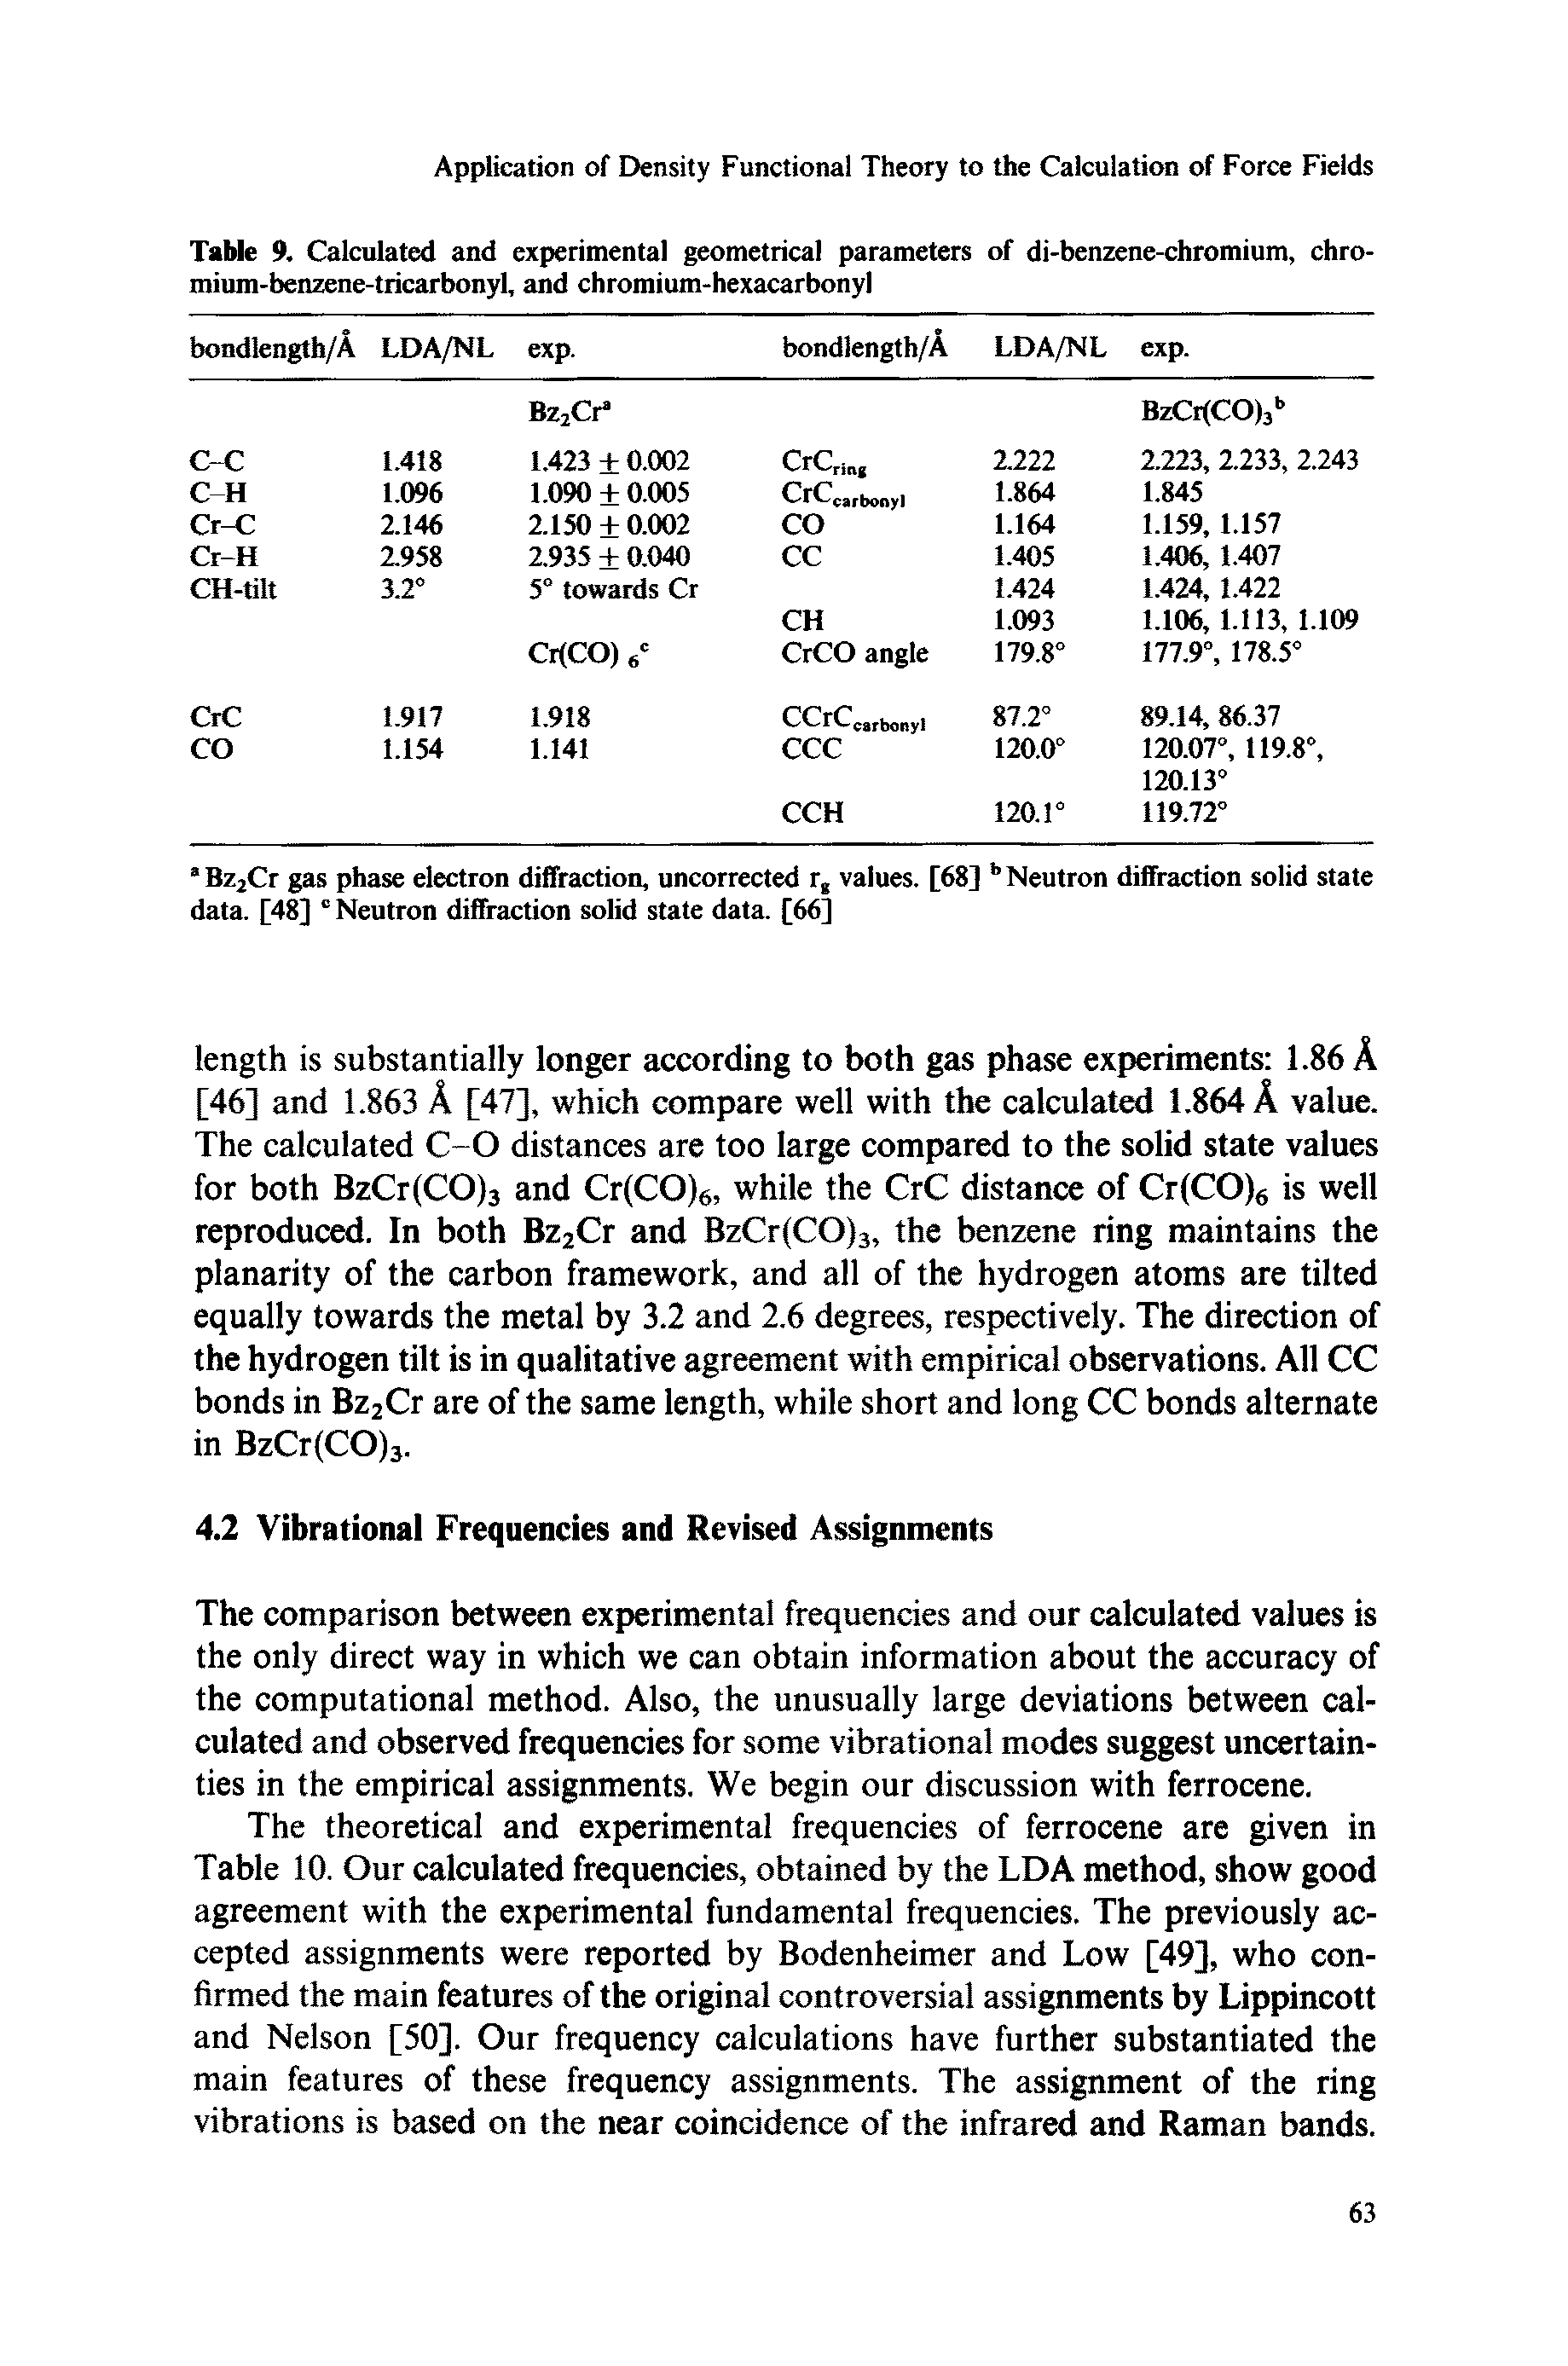 Table 9. Calculated and experimental geometrical parameters of di-benzene-chromium, chromium-benzene-tricarbonyl, and chromium-hexacarbonyl...